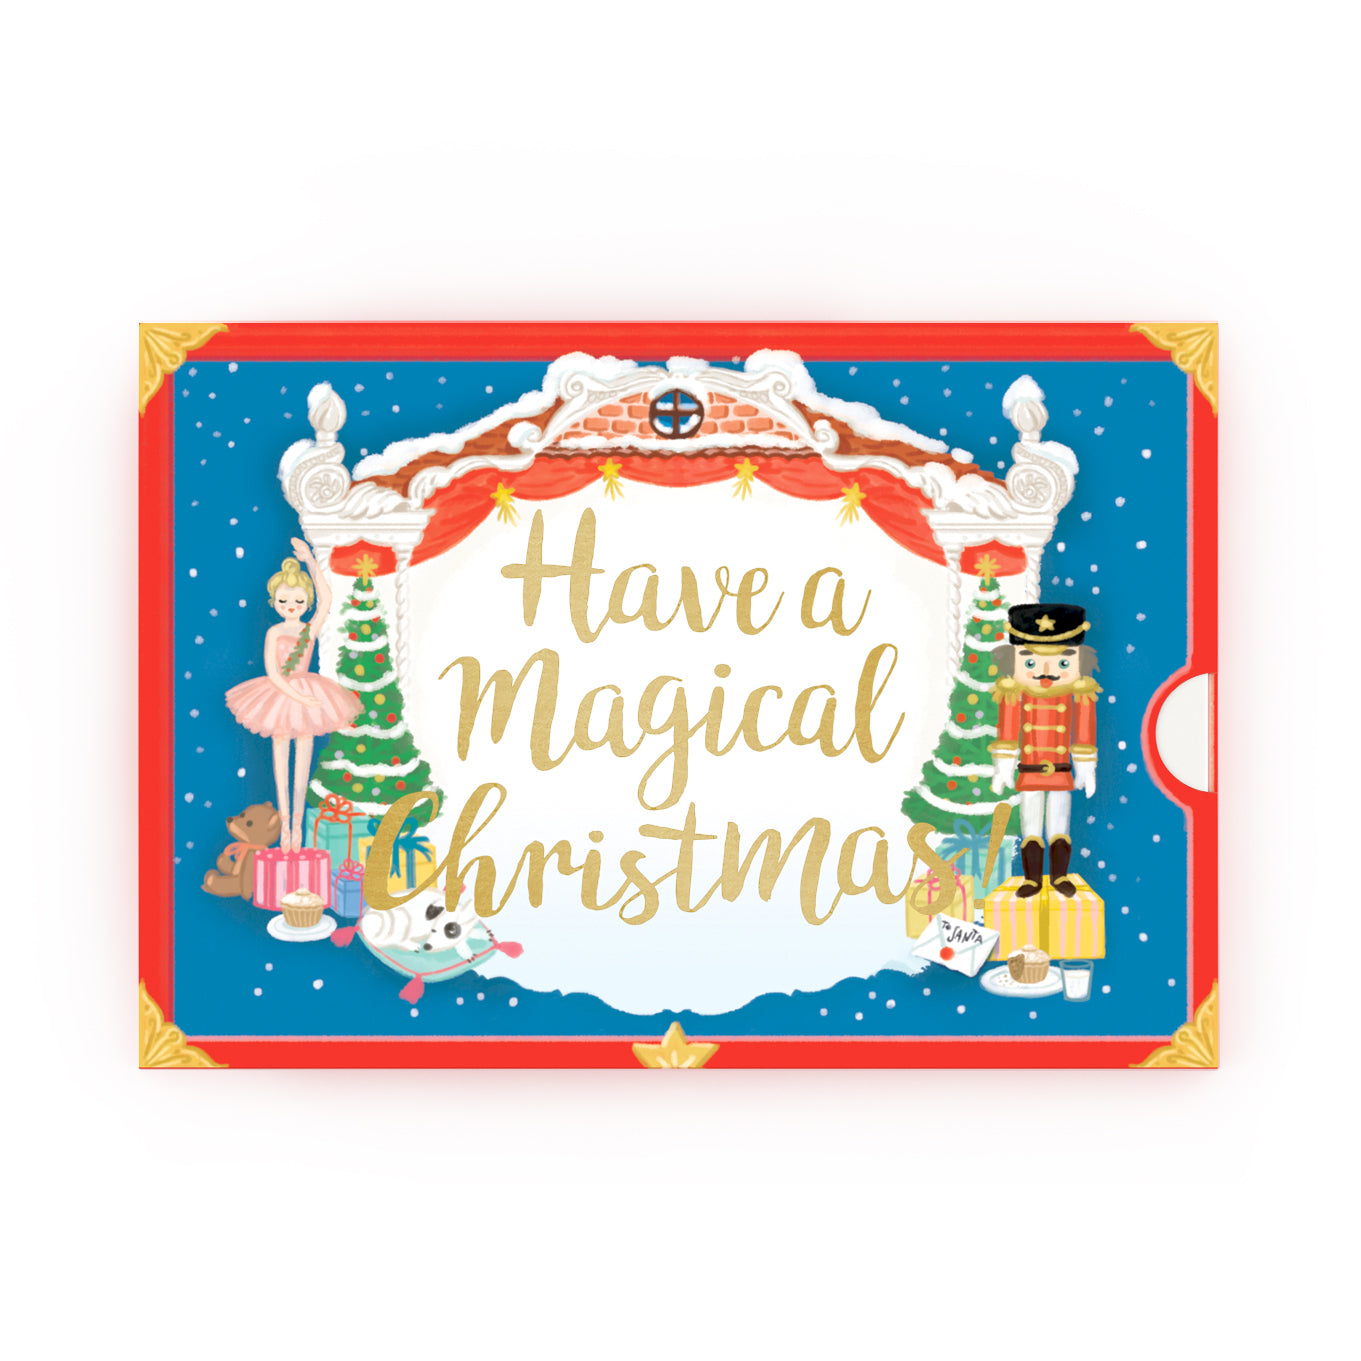 Have A Magical Christmas Music Box Card Novelty Dancing Musical Christmas Card